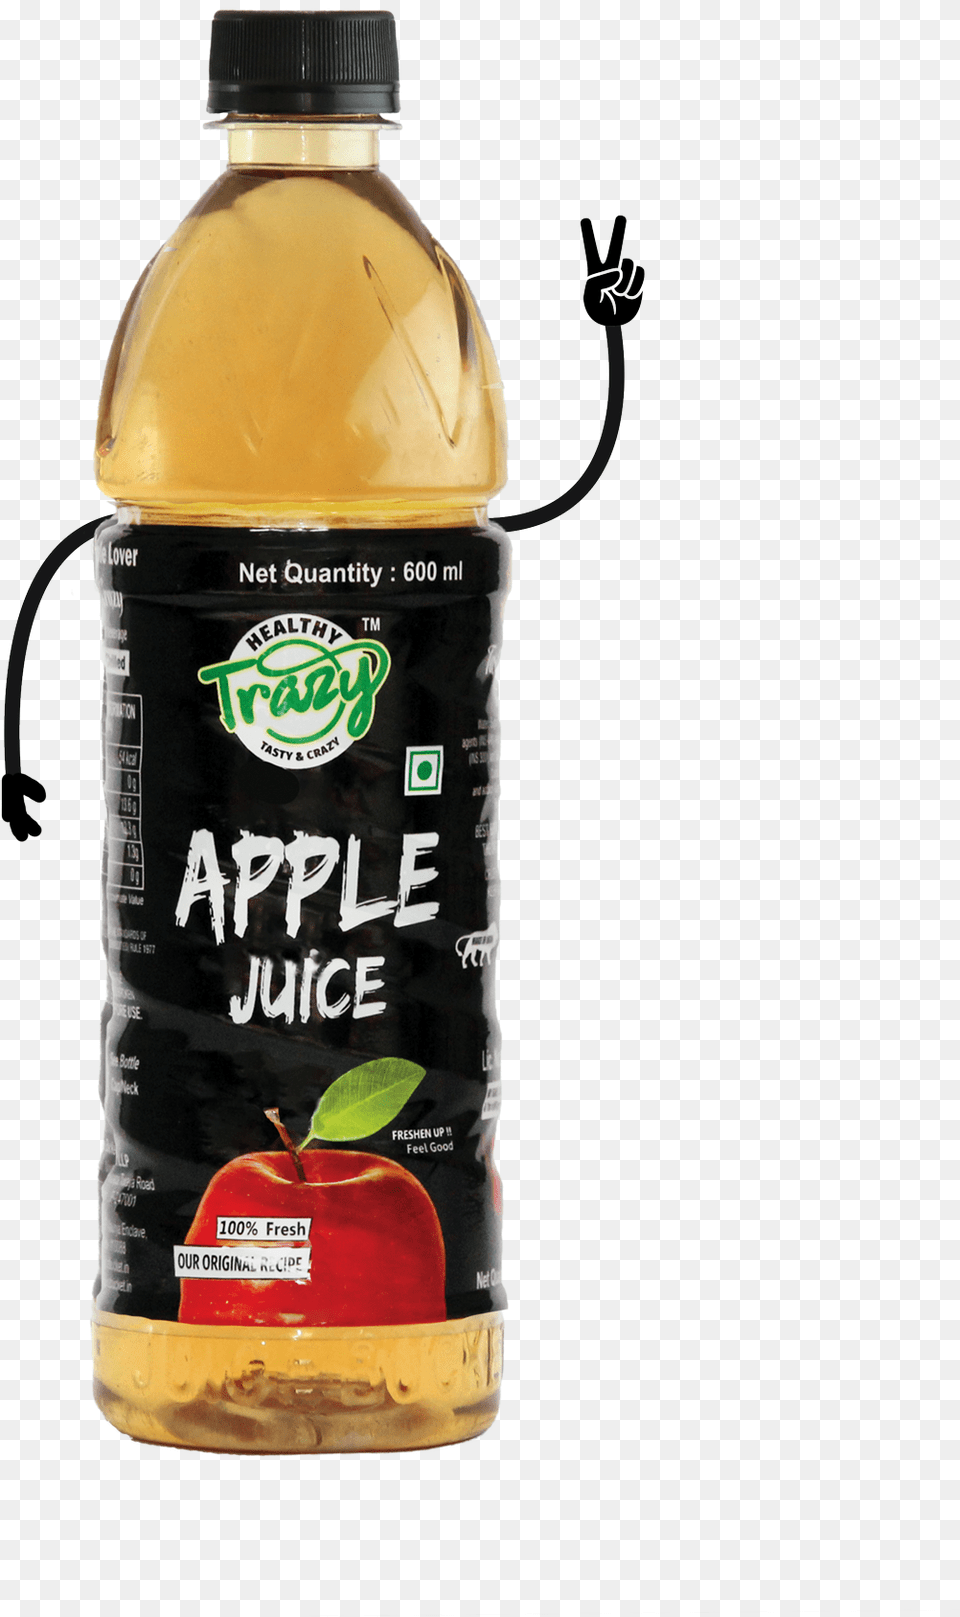 Apple Juice Trazy Juices Plastic Bottle, Beverage, Cooking Oil, Food, Cosmetics Png